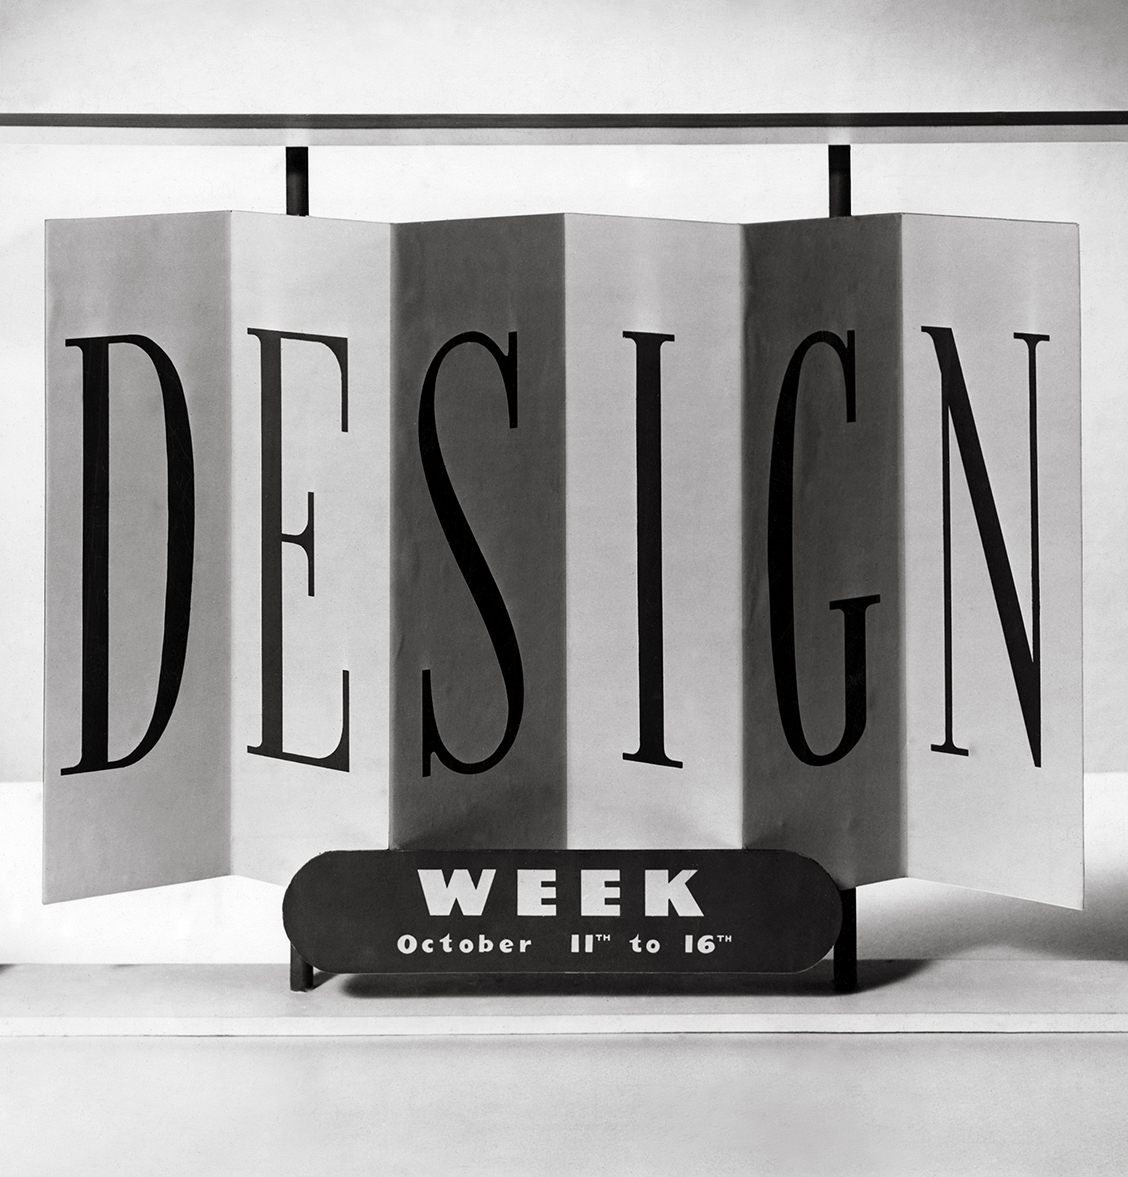 Image: Design Week Showcase, 1950 ©Design Council / University of Brighton Design Archives